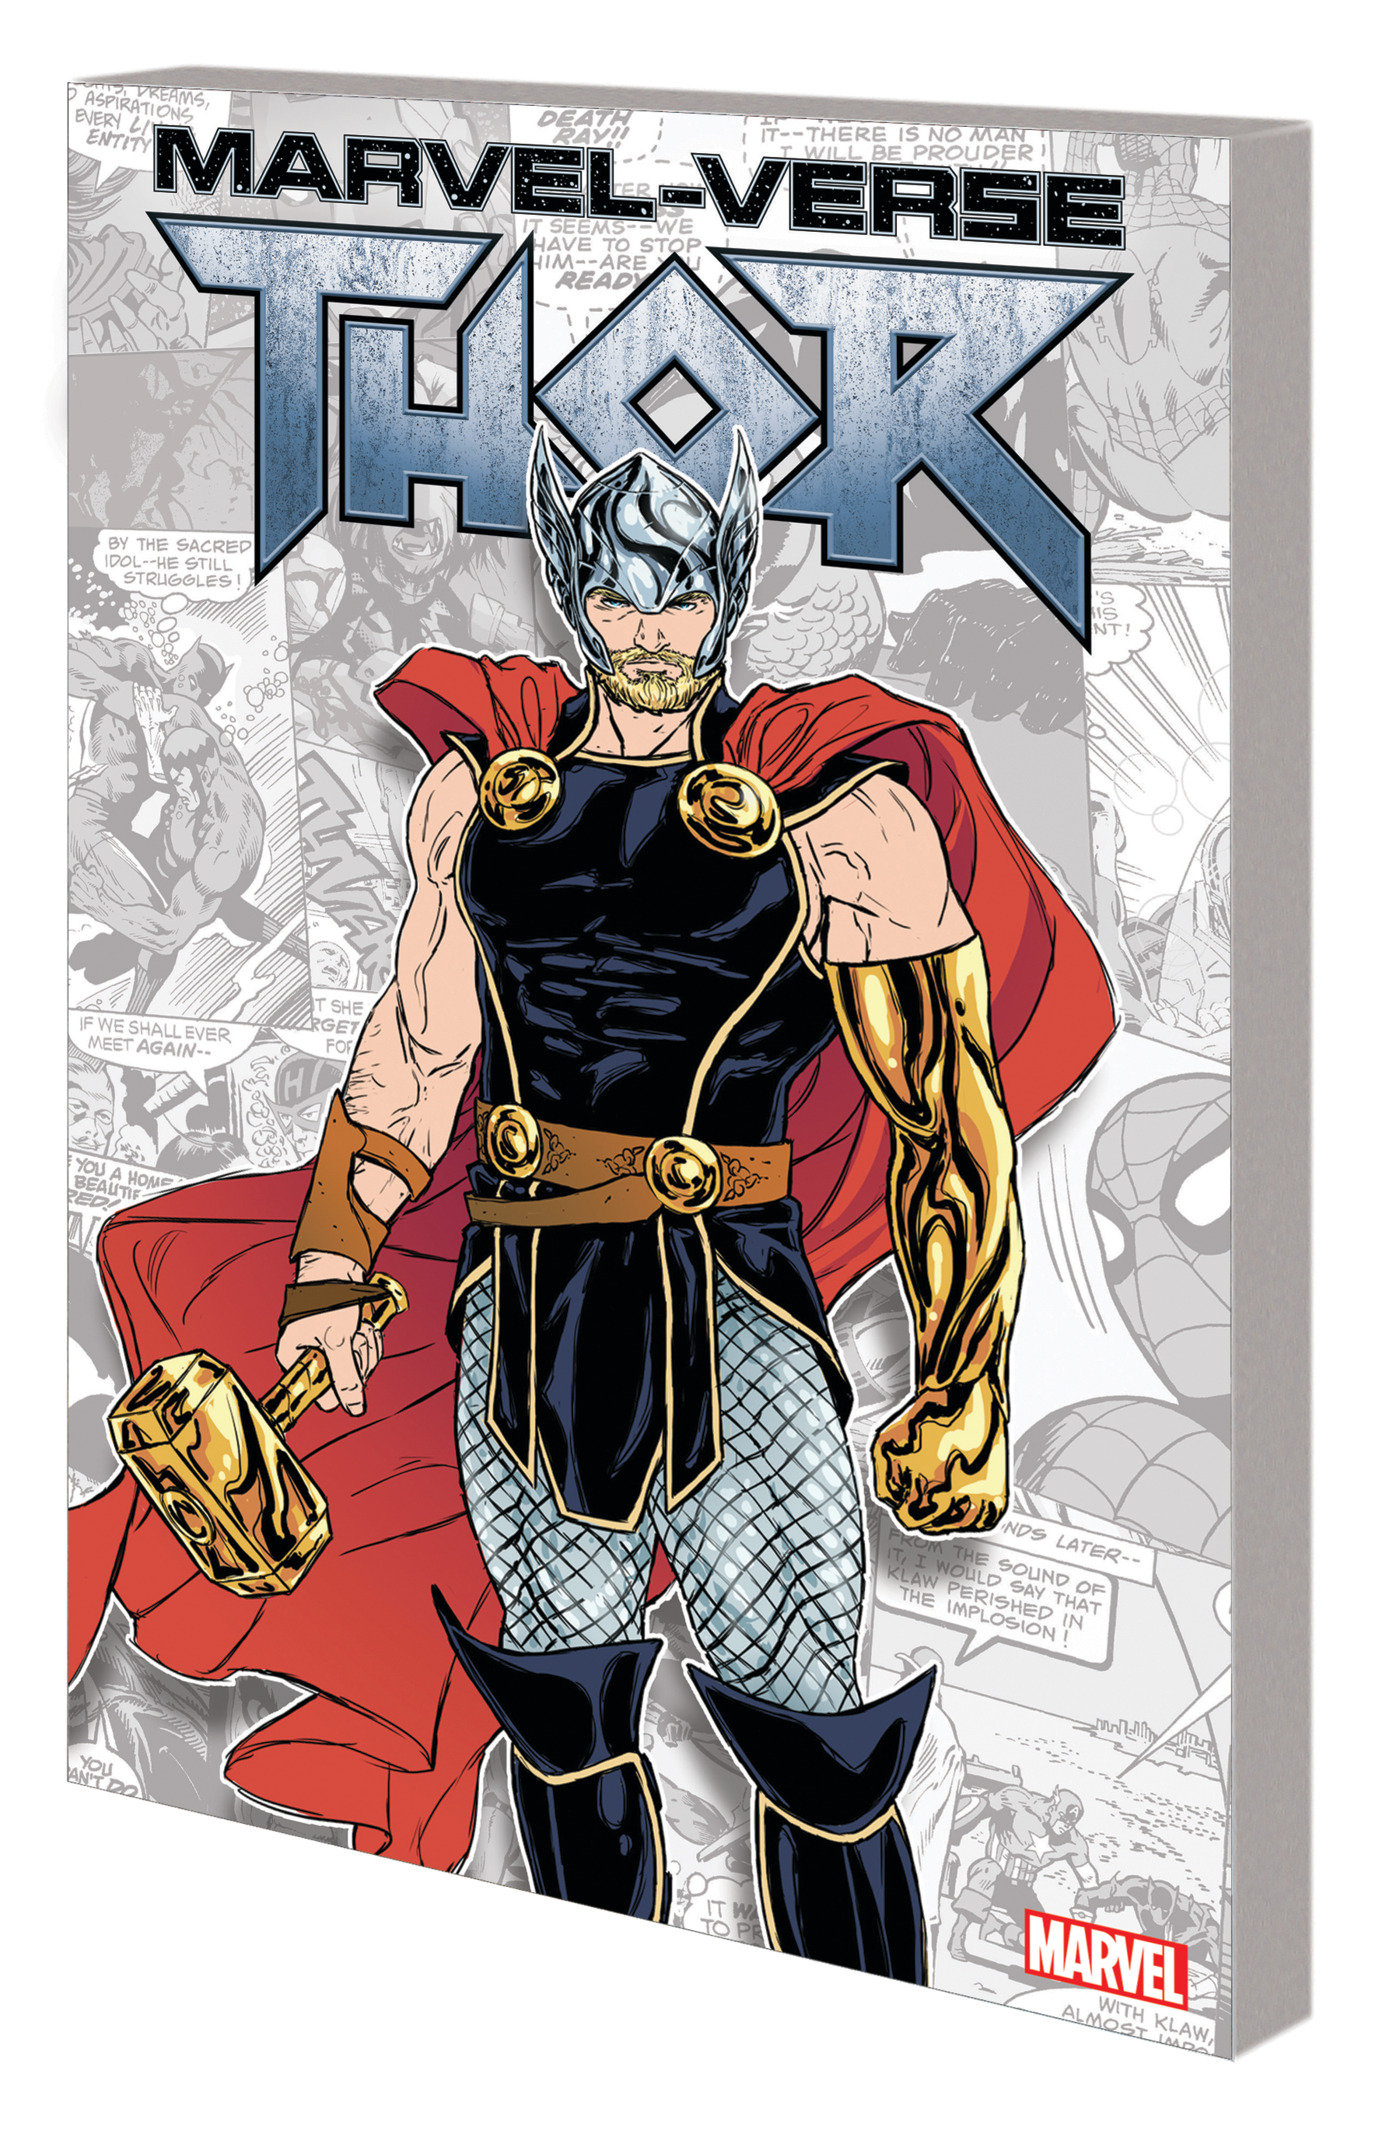 Marvel-Verse Graphic Novel Volume 16 Thor